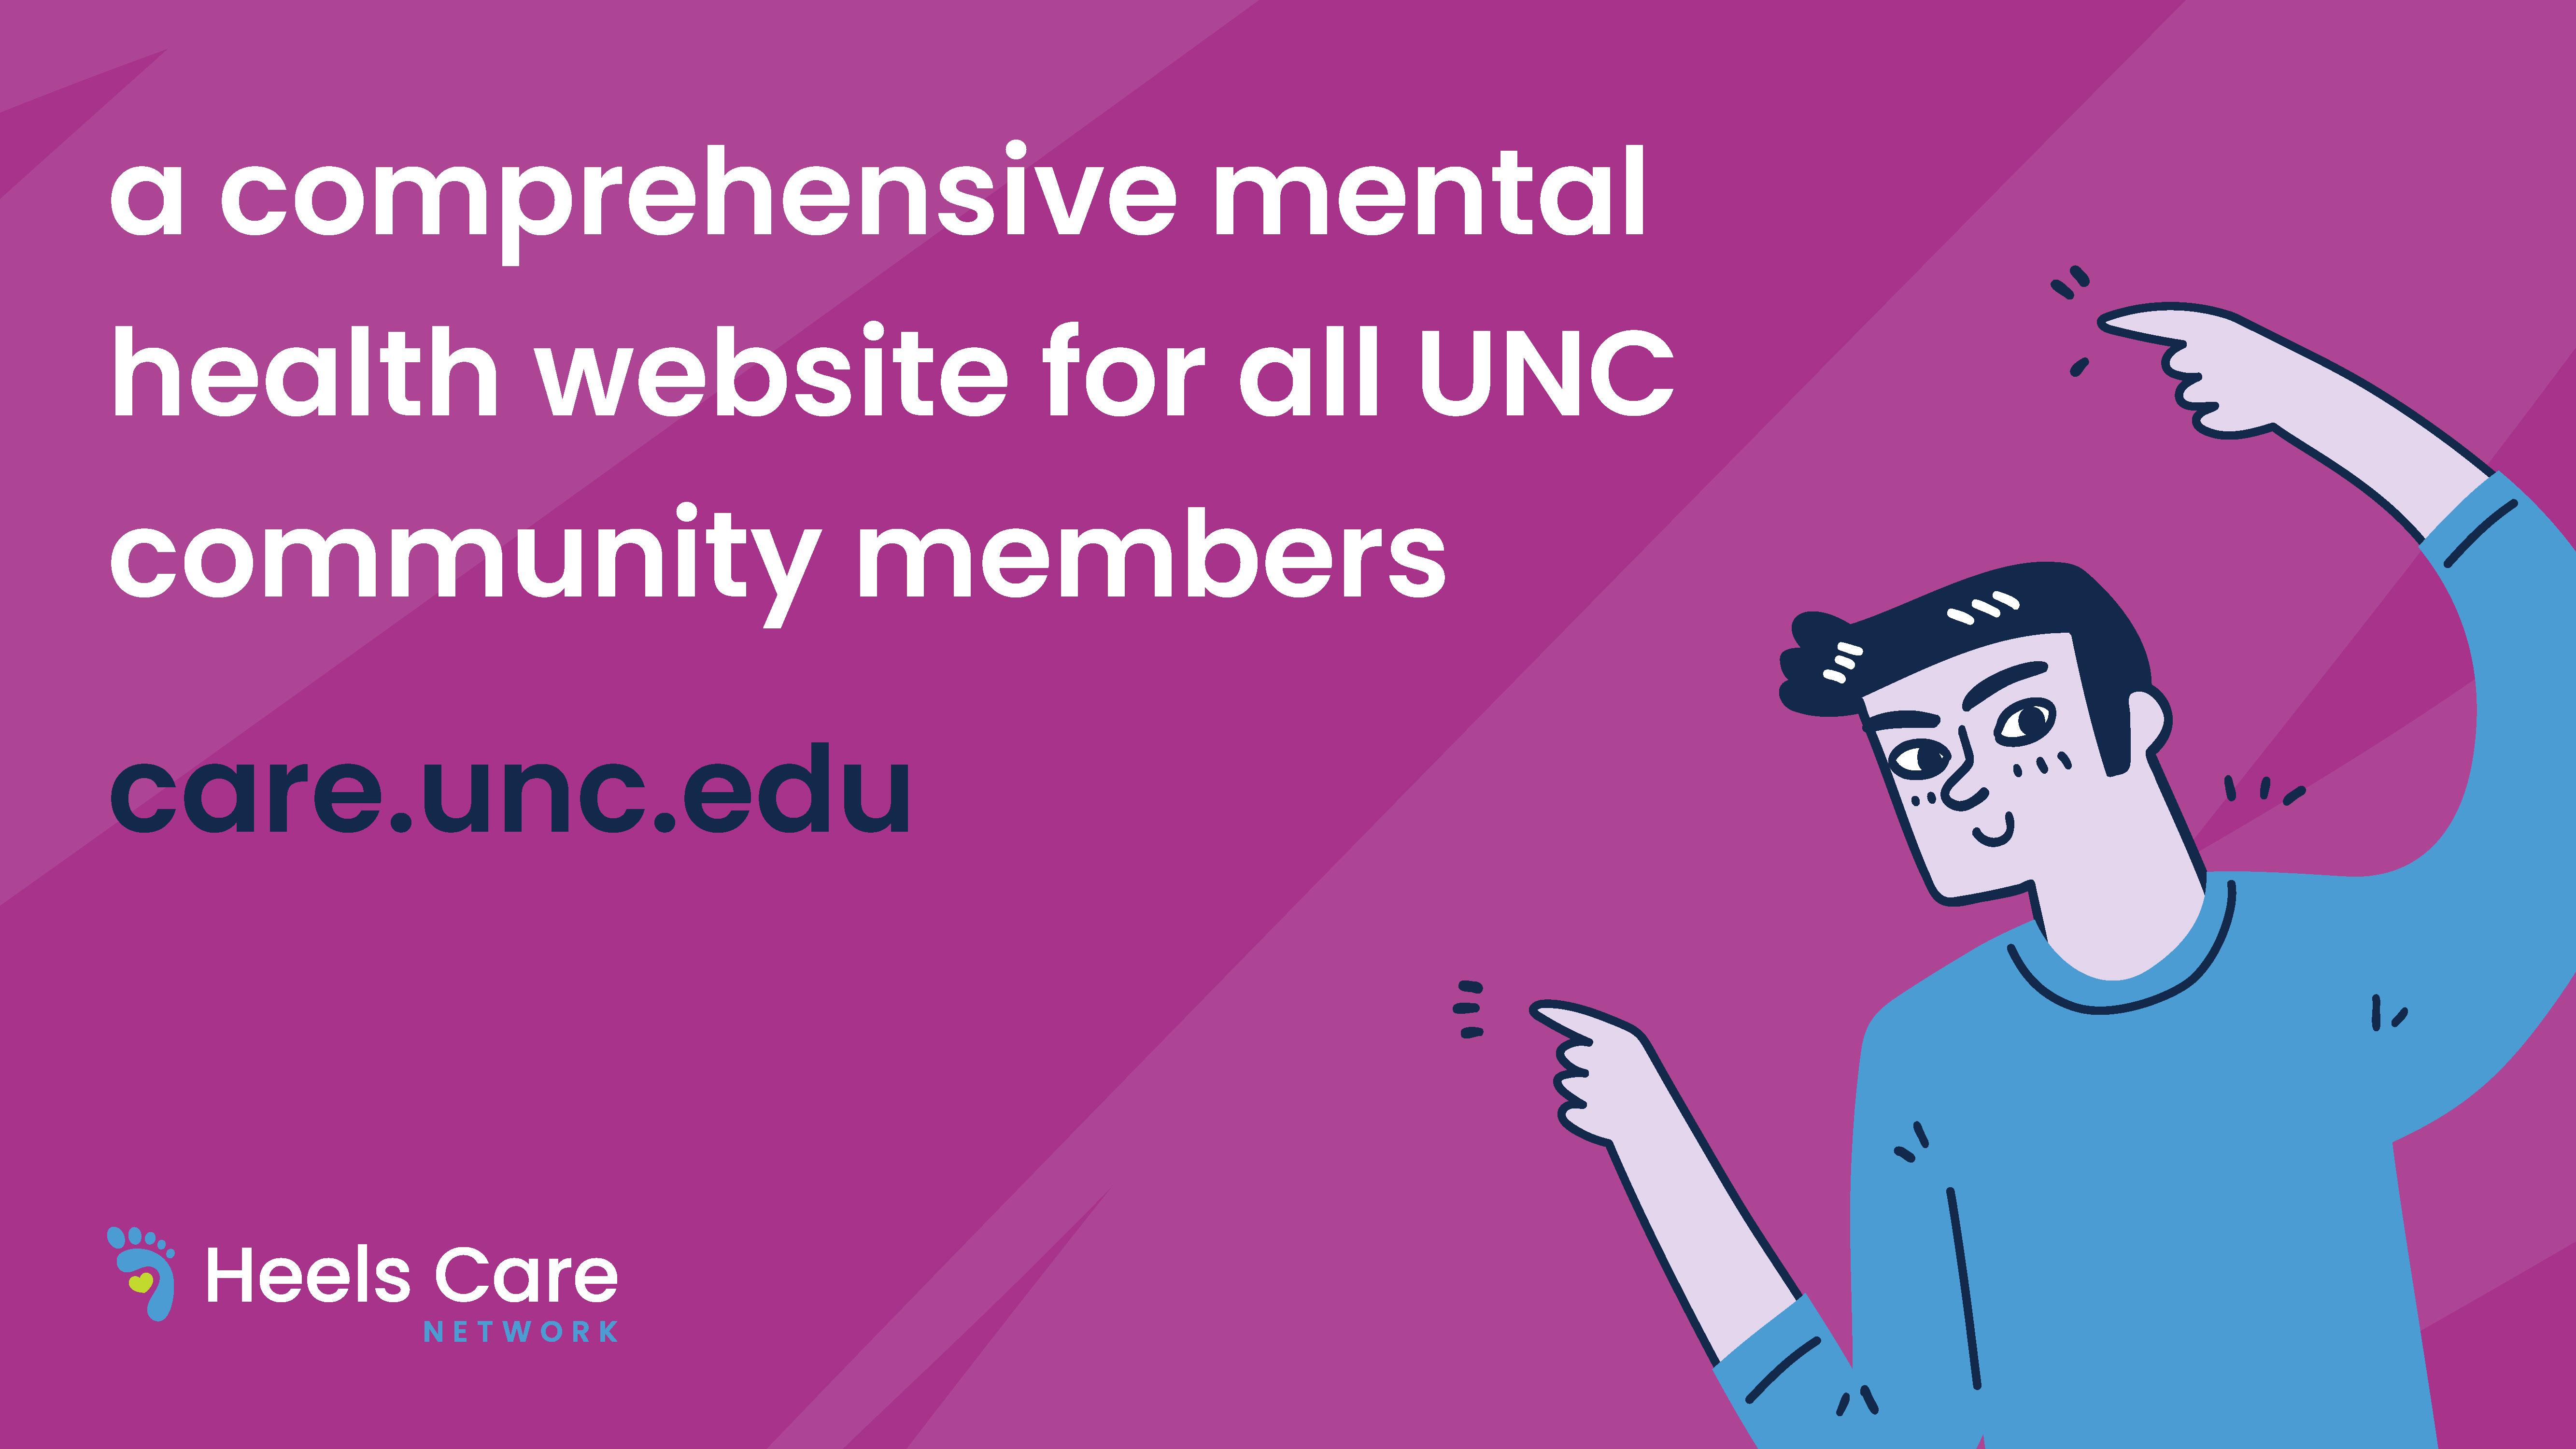 a comprehensive mental health website for all UNC community members care.unc.edu